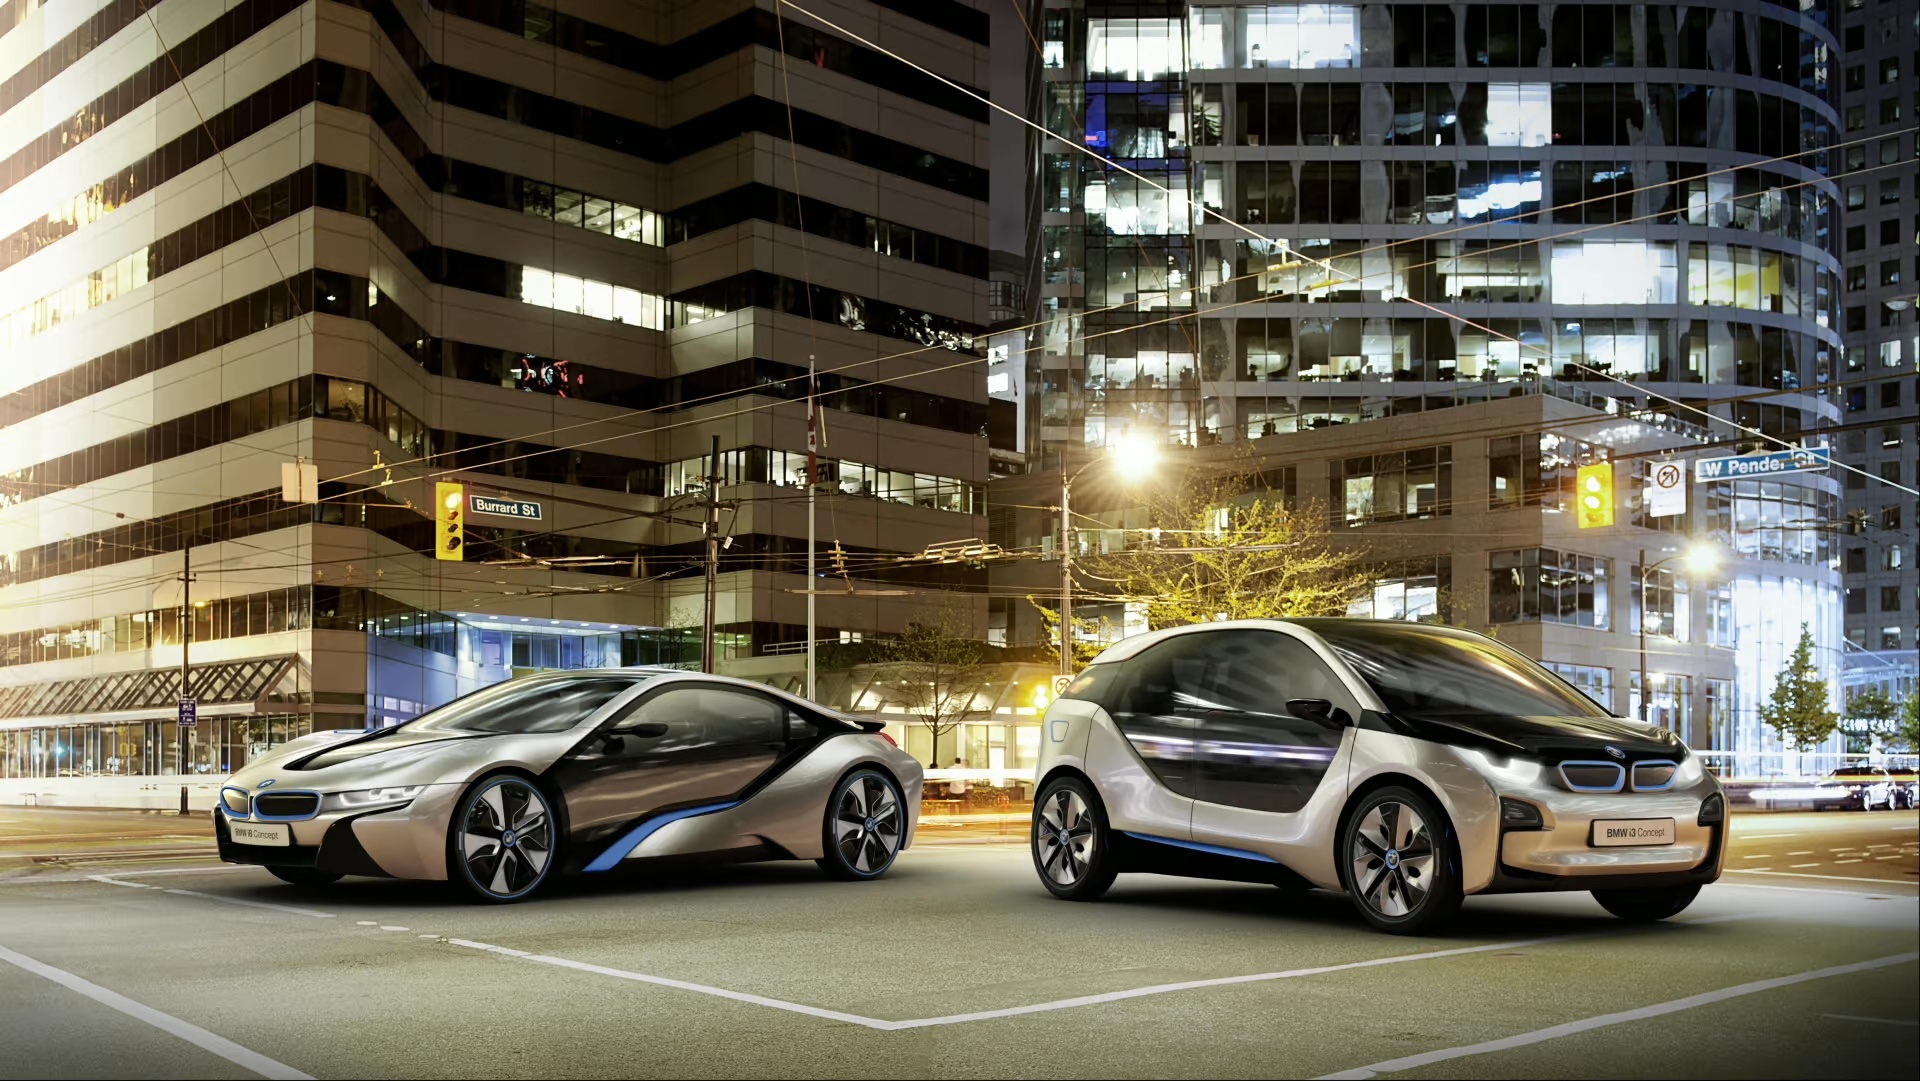 The skipped future: Hybrid vehicles